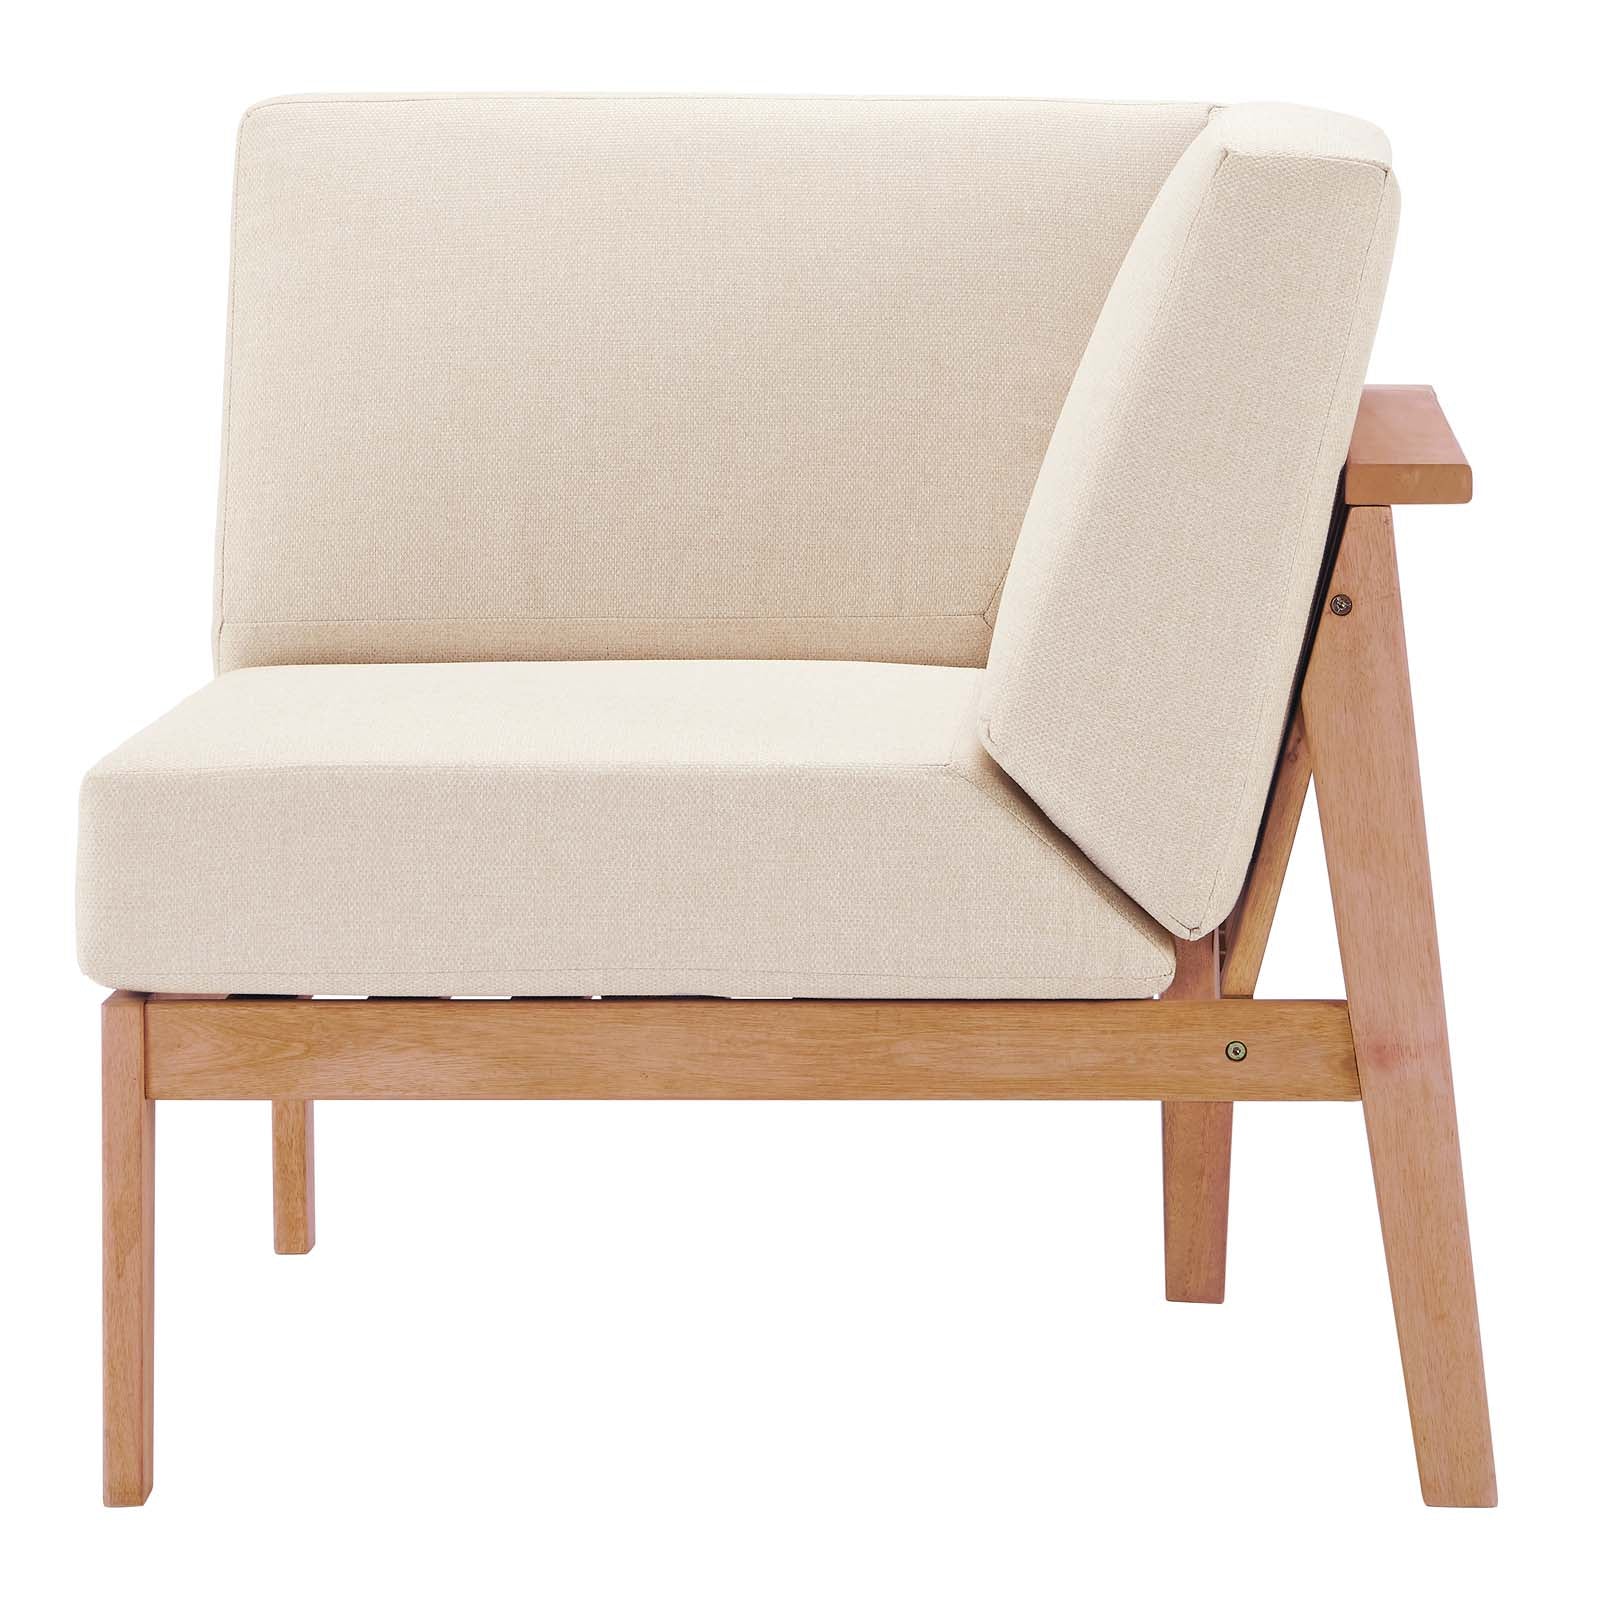 Sedona Outdoor Patio Eucalyptus Wood Sectional Sofa Corner Chair - East Shore Modern Home Furnishings